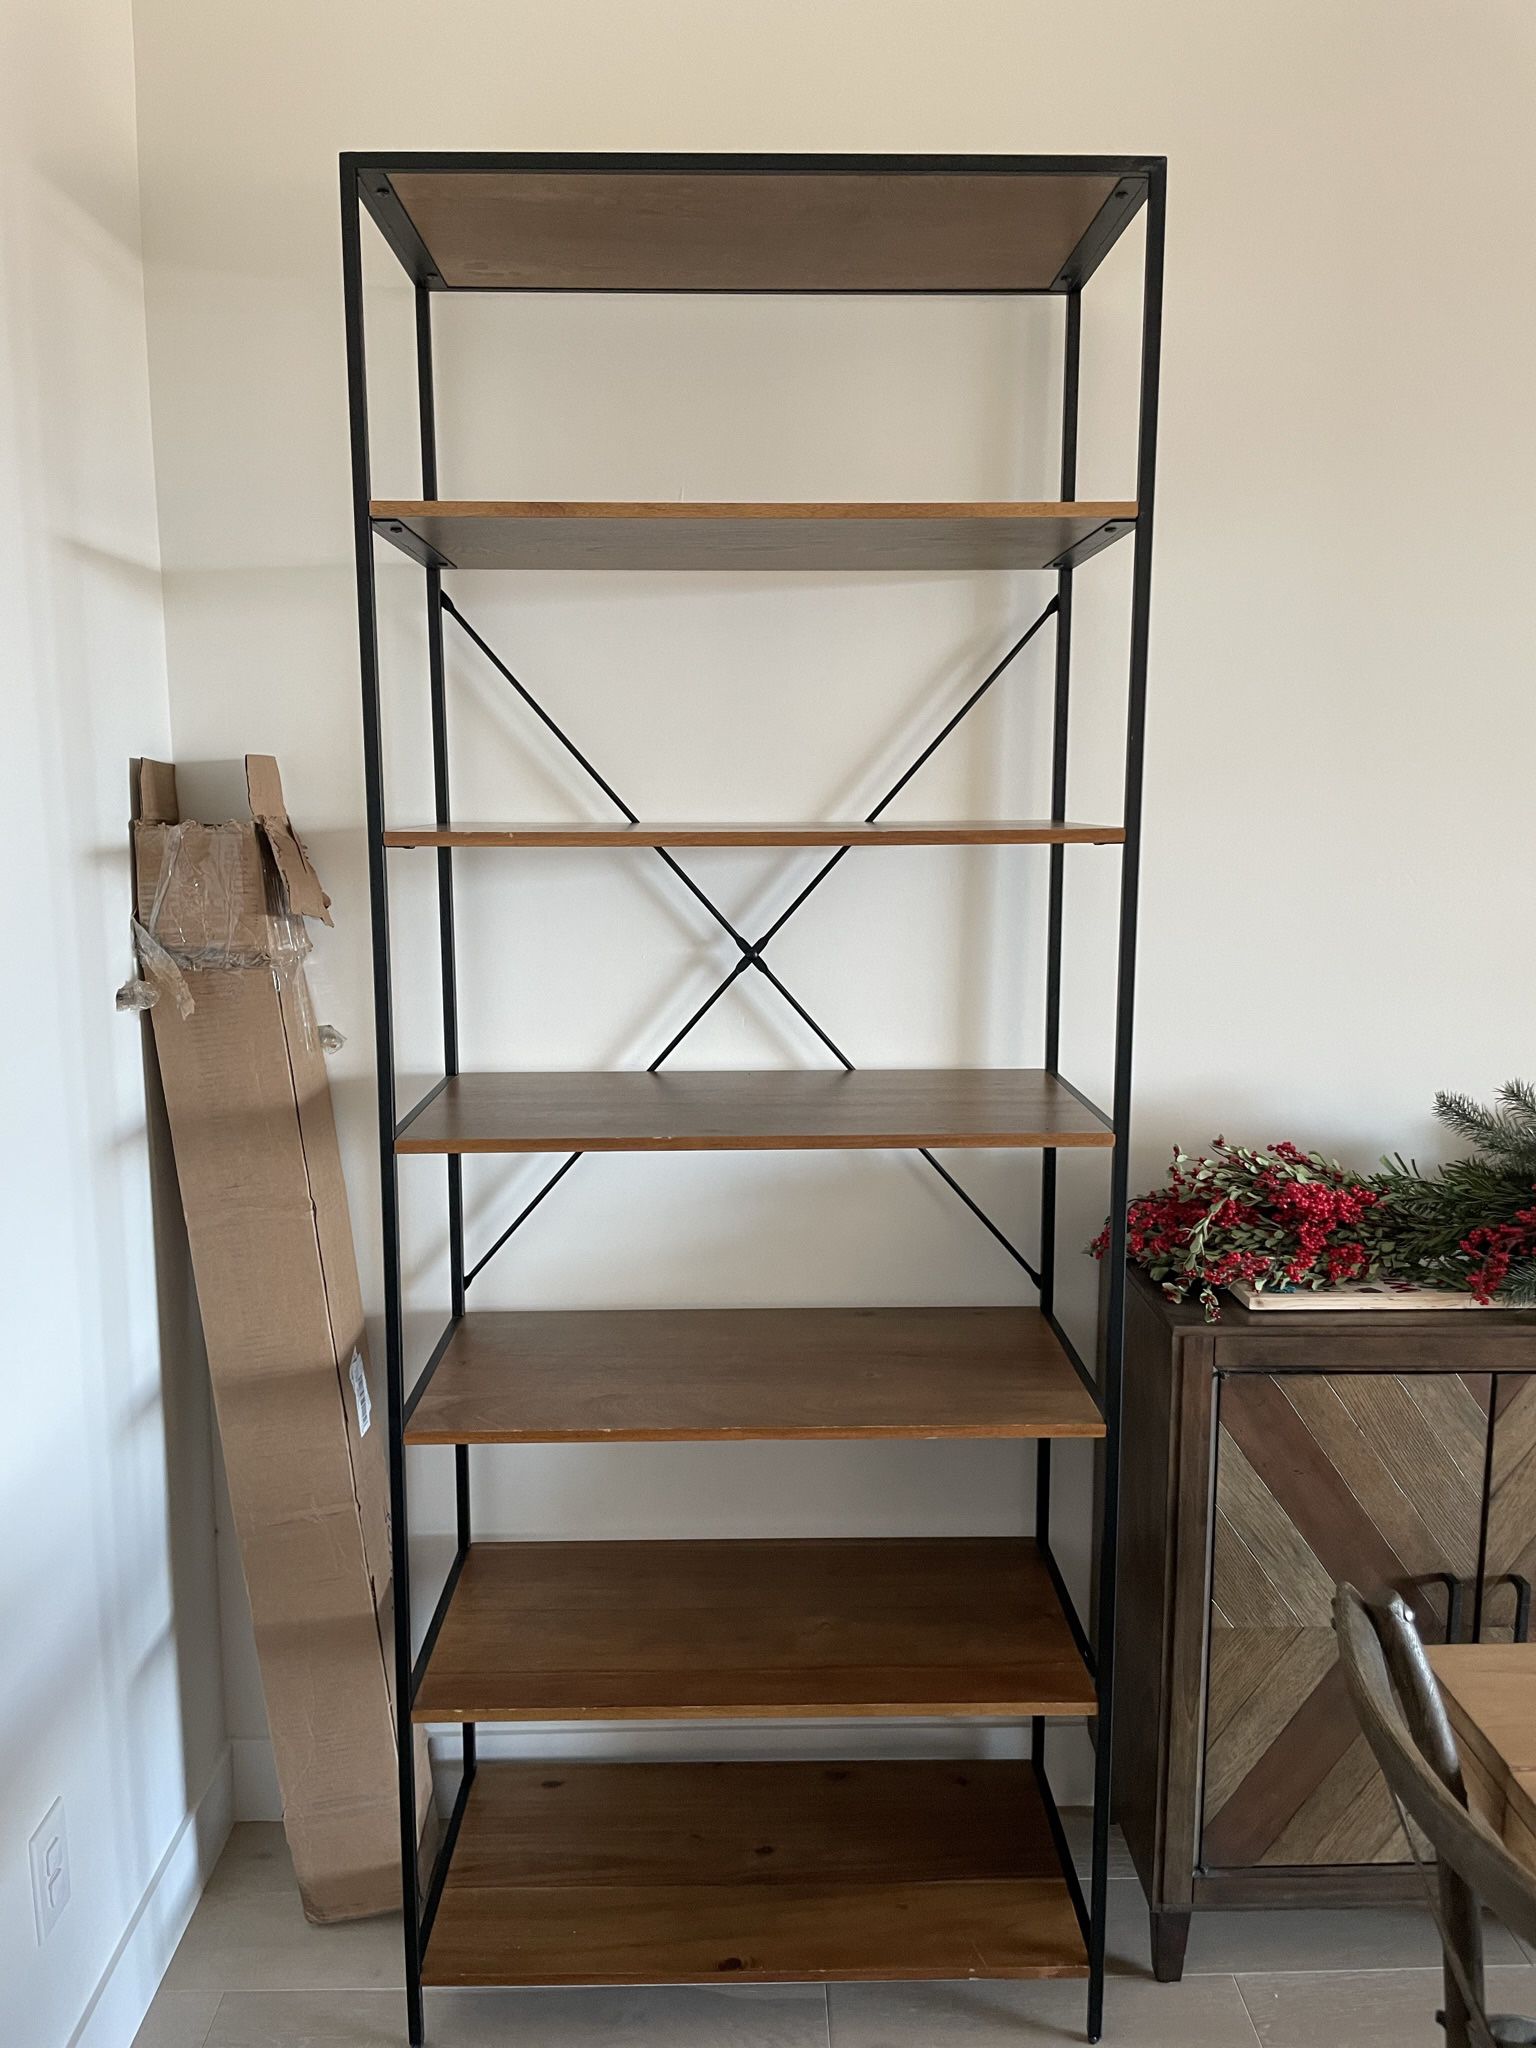 Bookshelf - Wood & Metal 6 Shelves